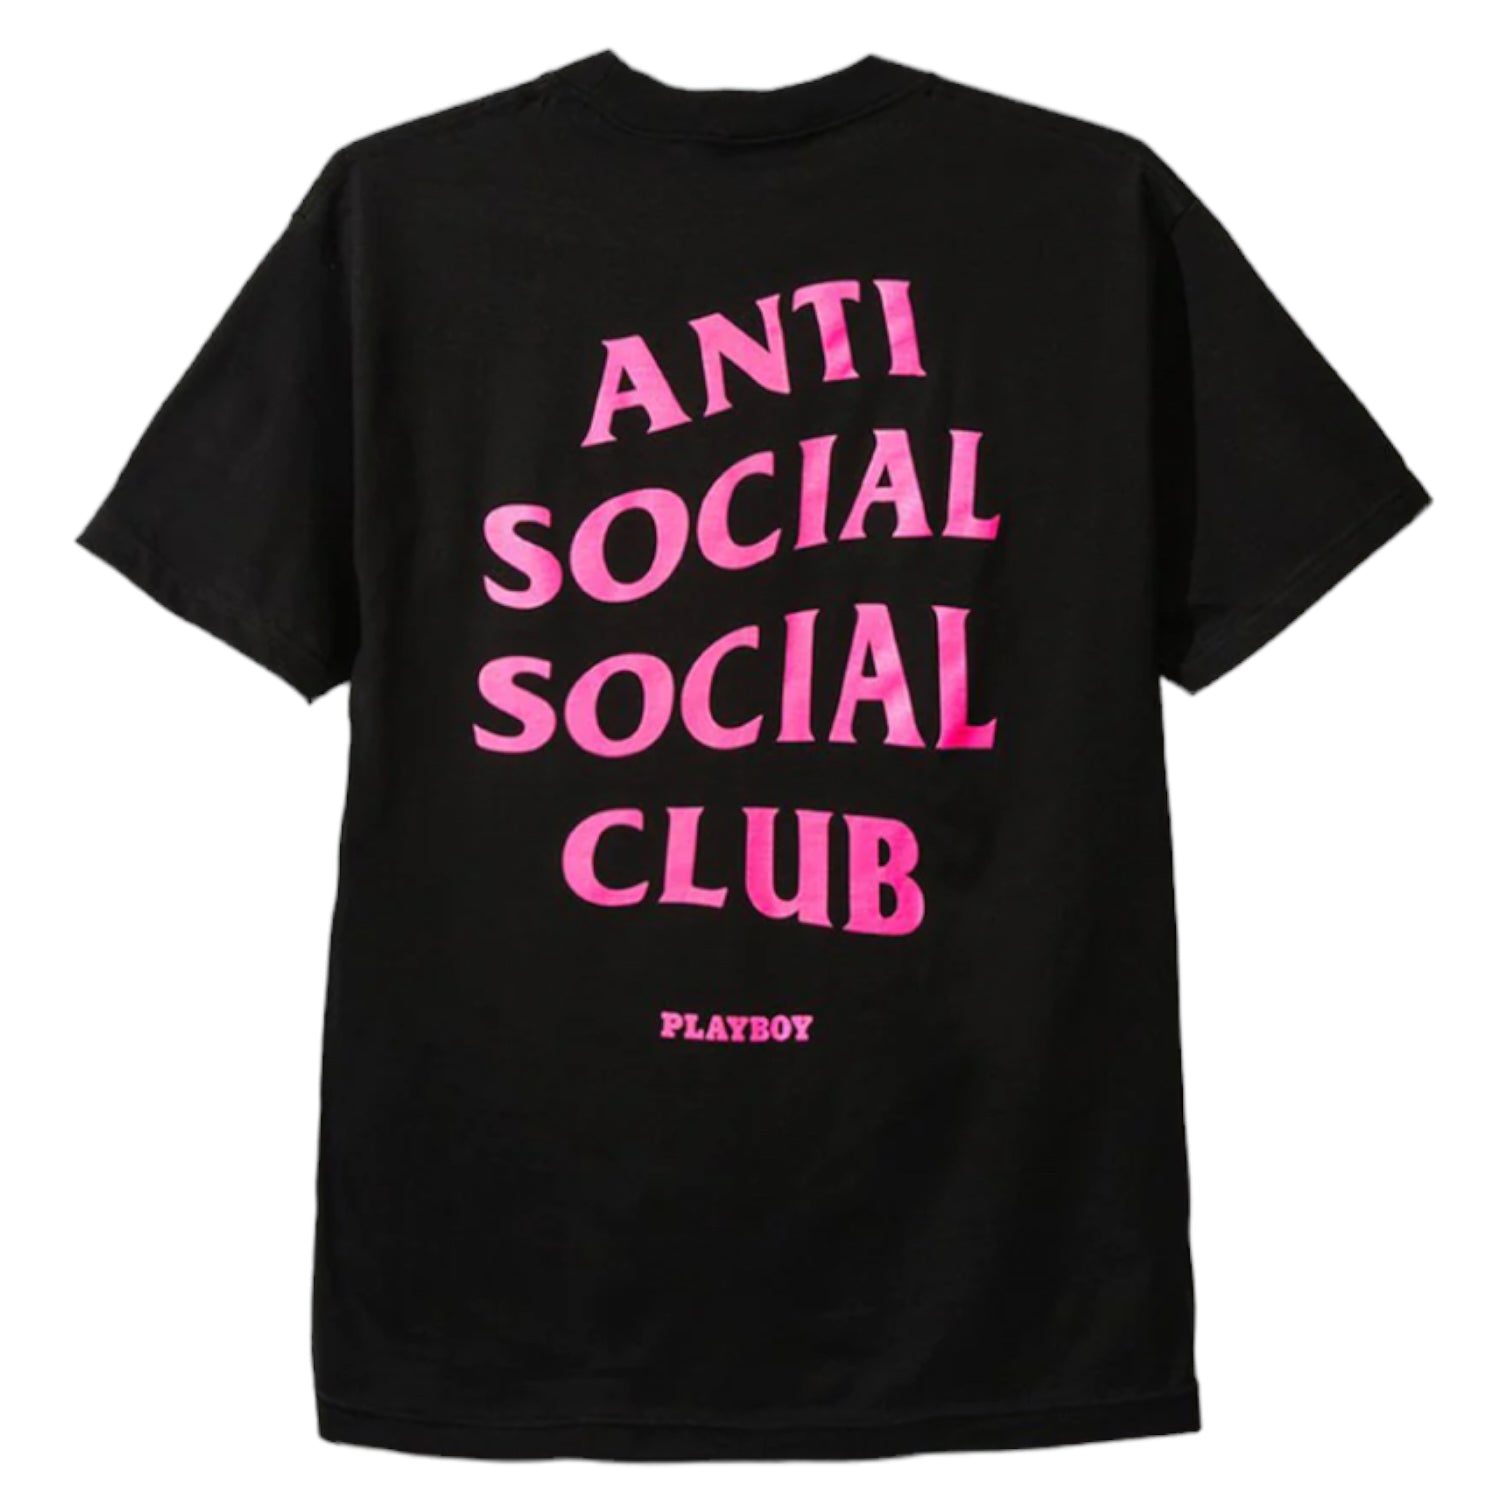 Anti Social Social Club Playboy Tee Black